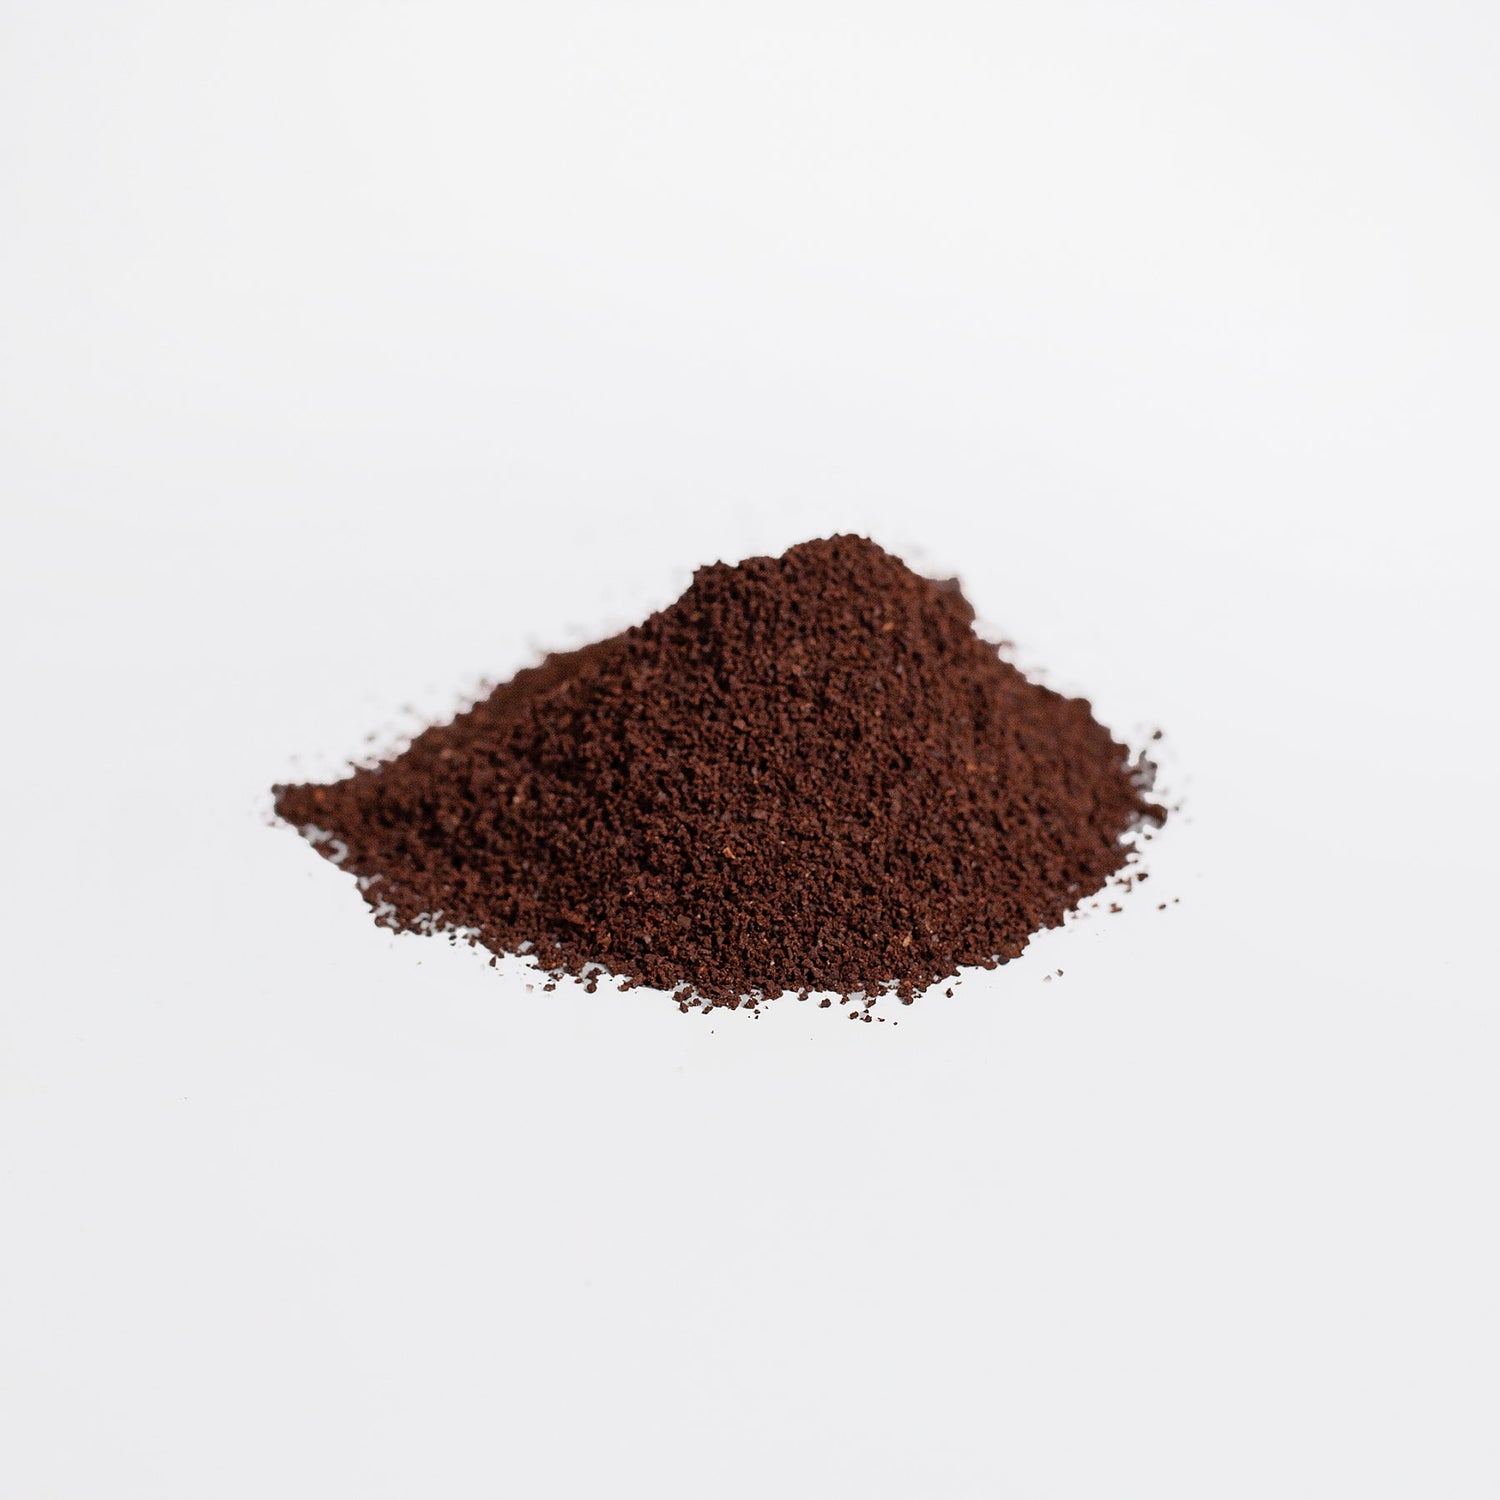 Hemp Coffee Blend - Medium Roast 4oz (113gms)